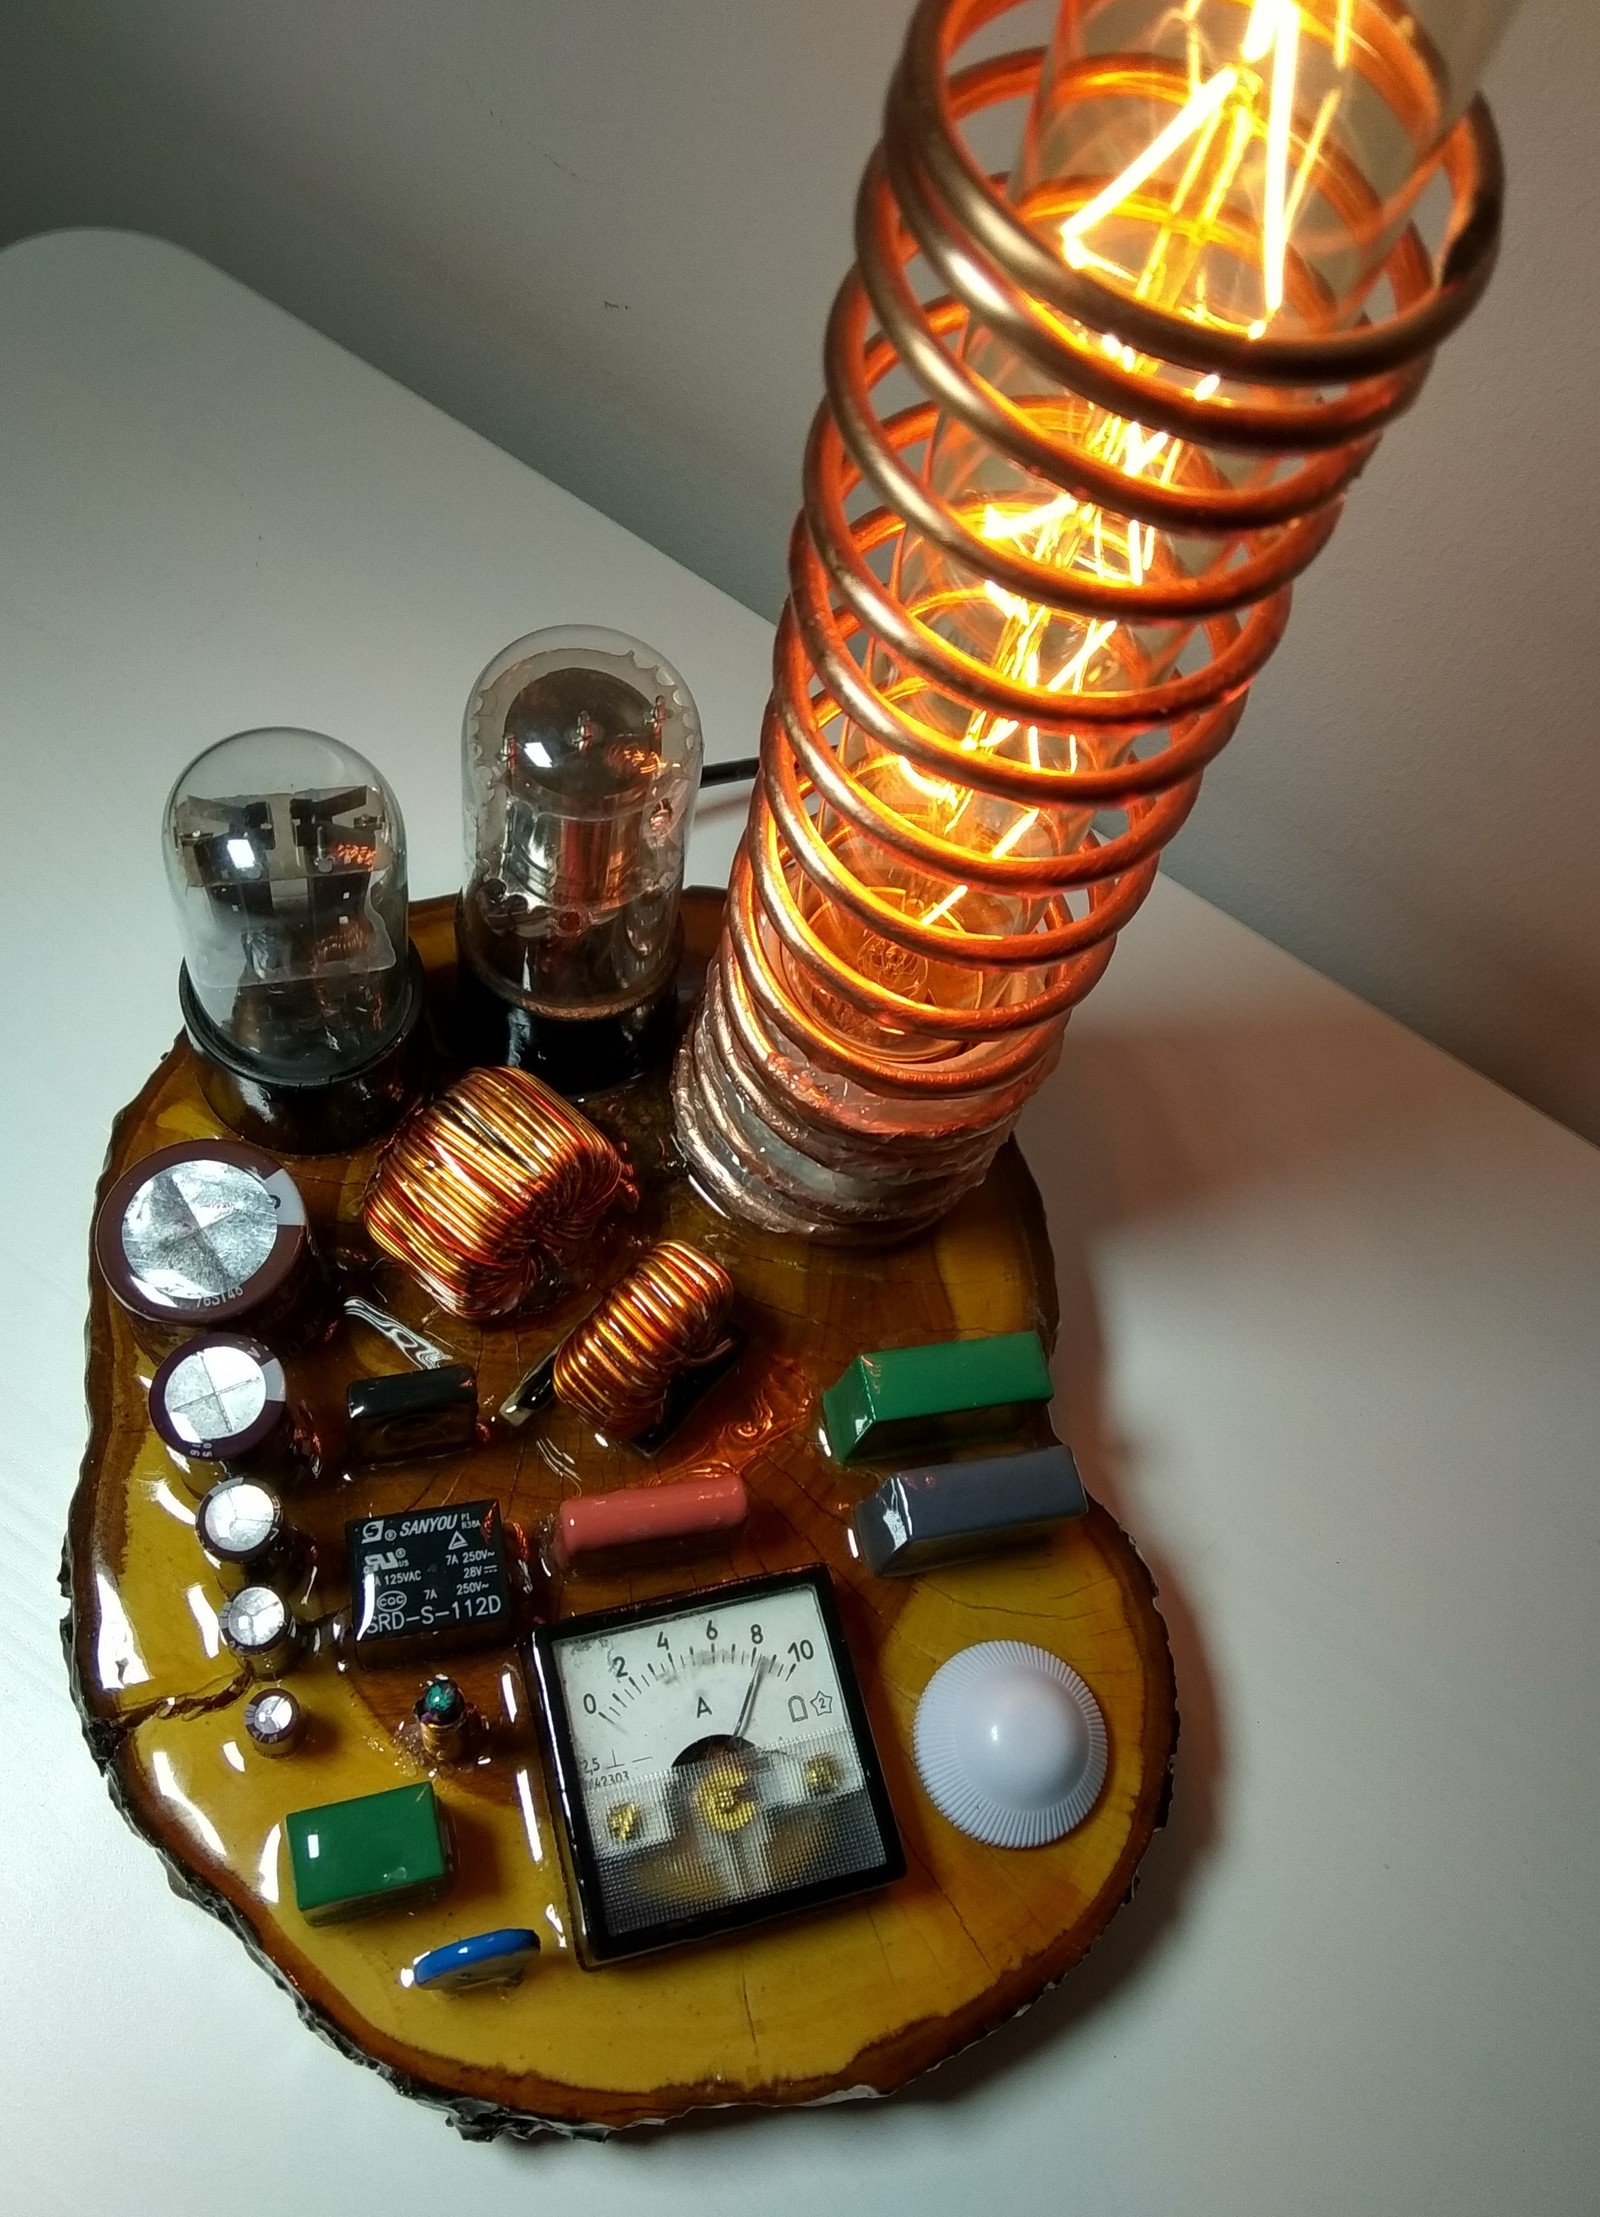 HZCH-12 v 2.0 - My, Xs, Needlework without process, Lamp, Decor, Garage Art, Cherry, Edison's lamp, Longpost